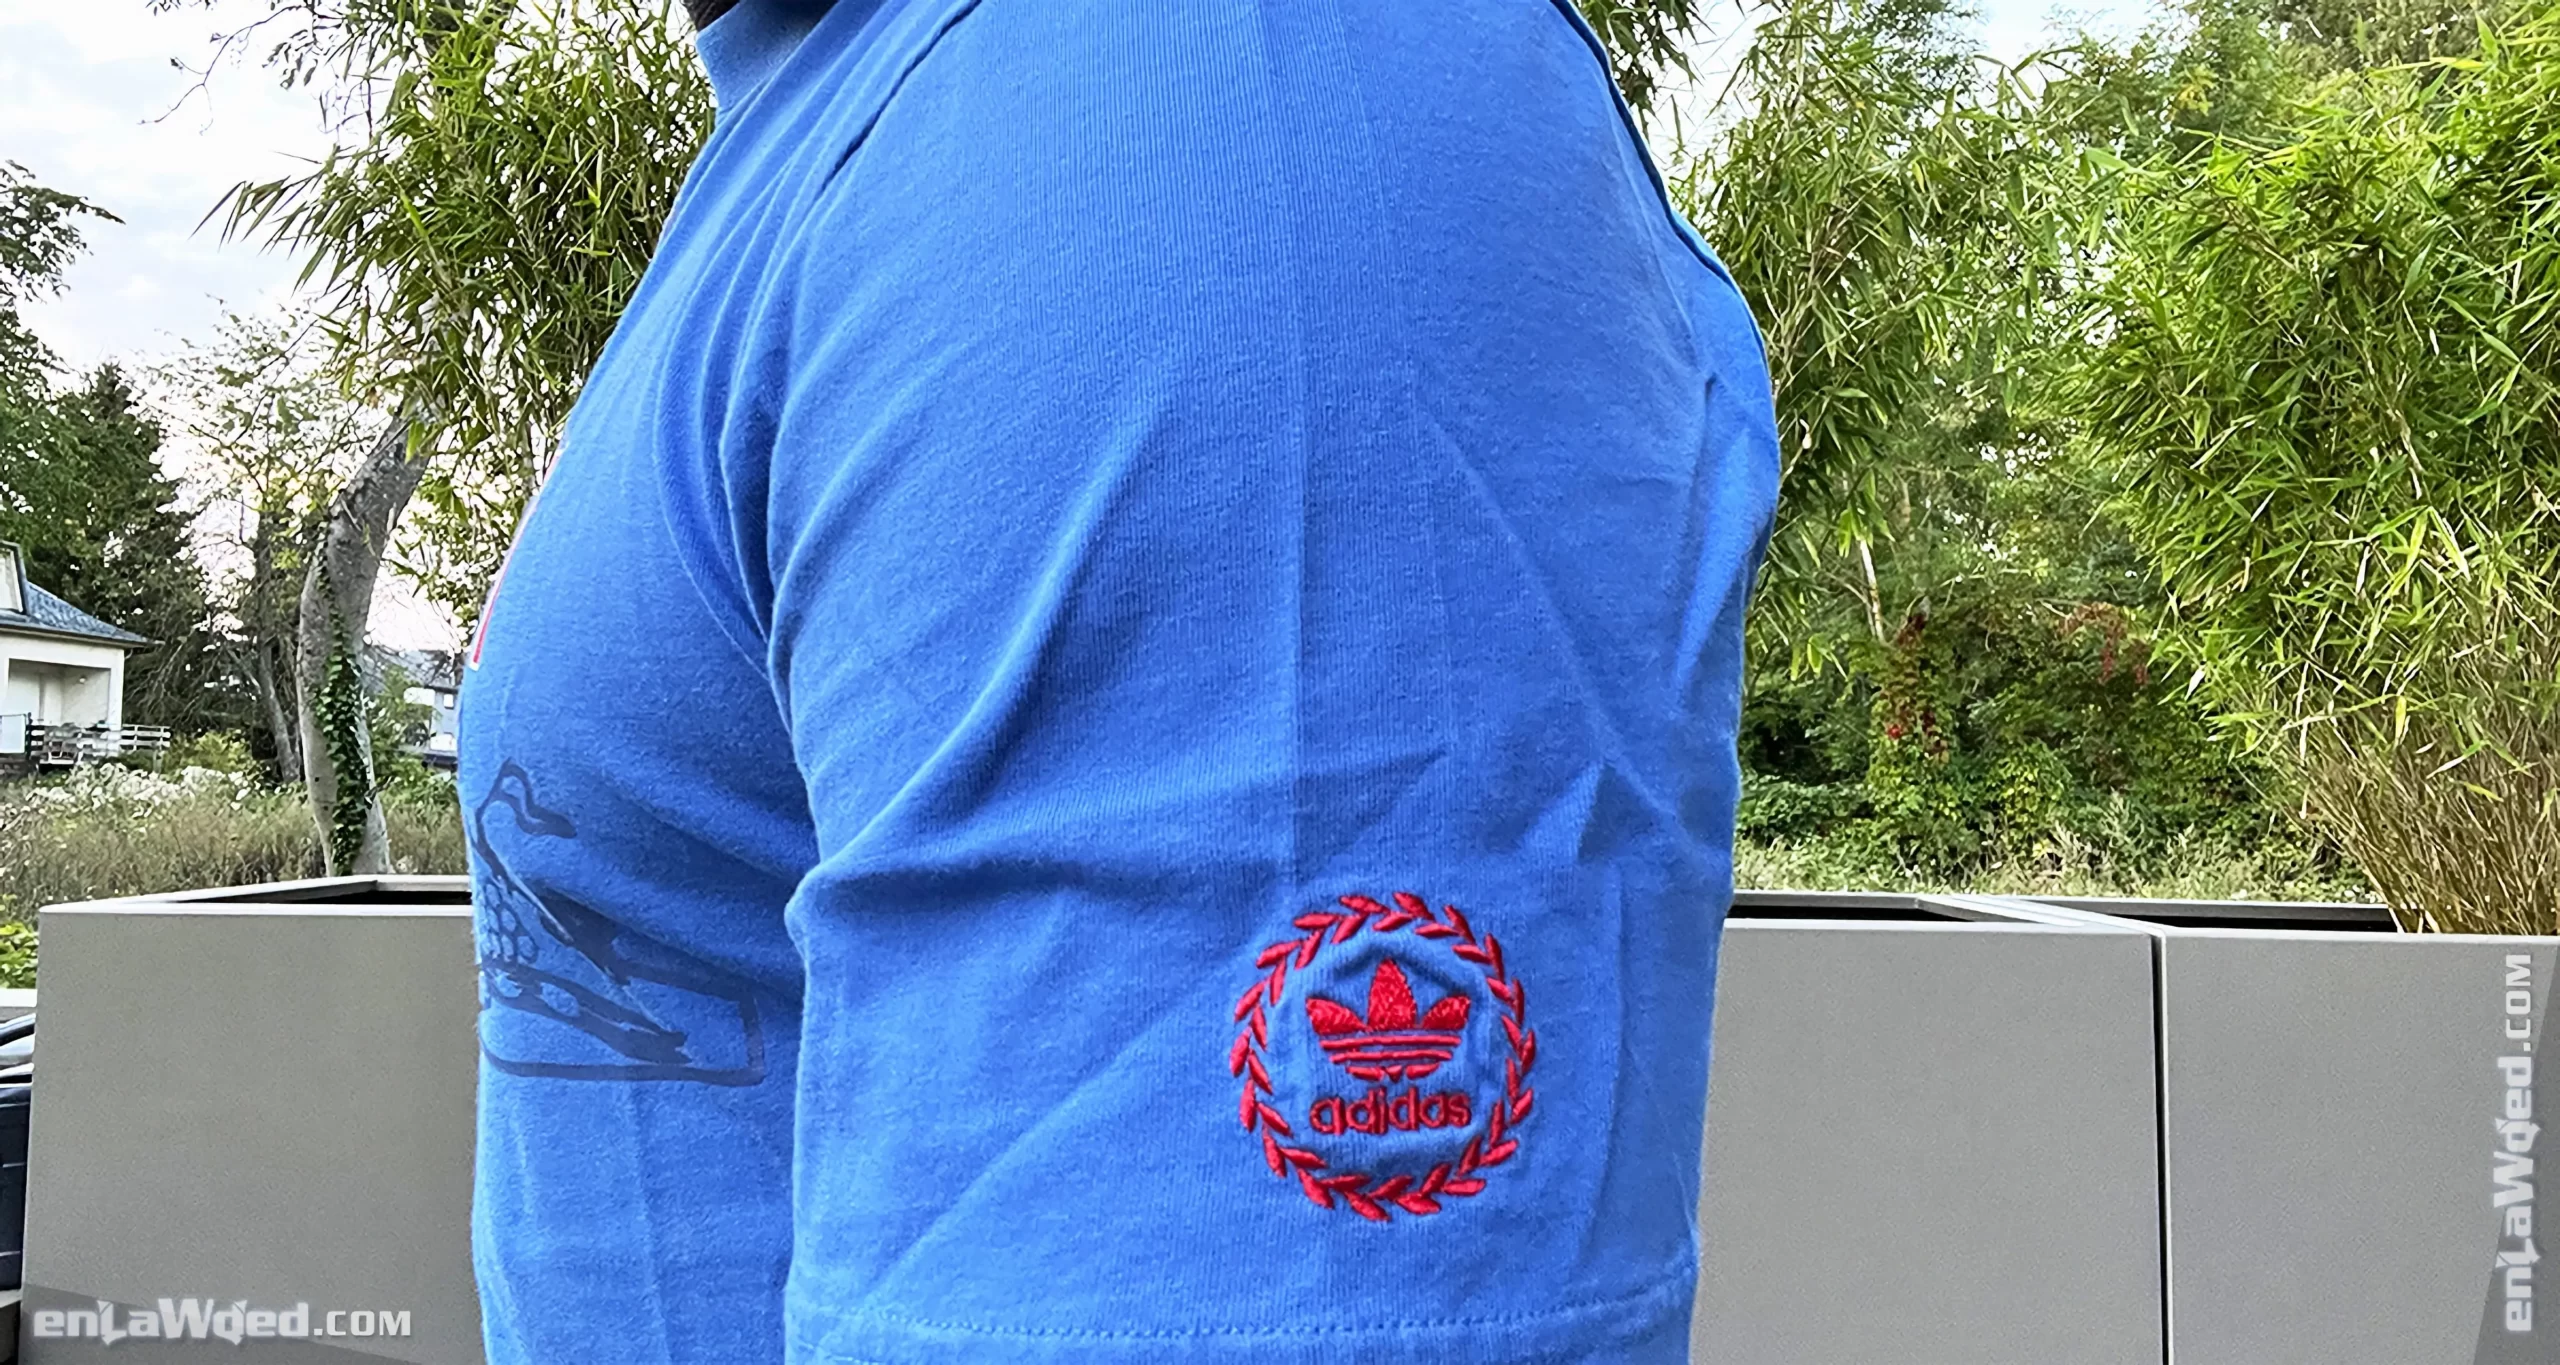 Men’s 2007 Haiti T-Shirt by Adidas Originals: Uplifted (EnLawded.com file #lp1n80gf126198jt3quzs59gn)